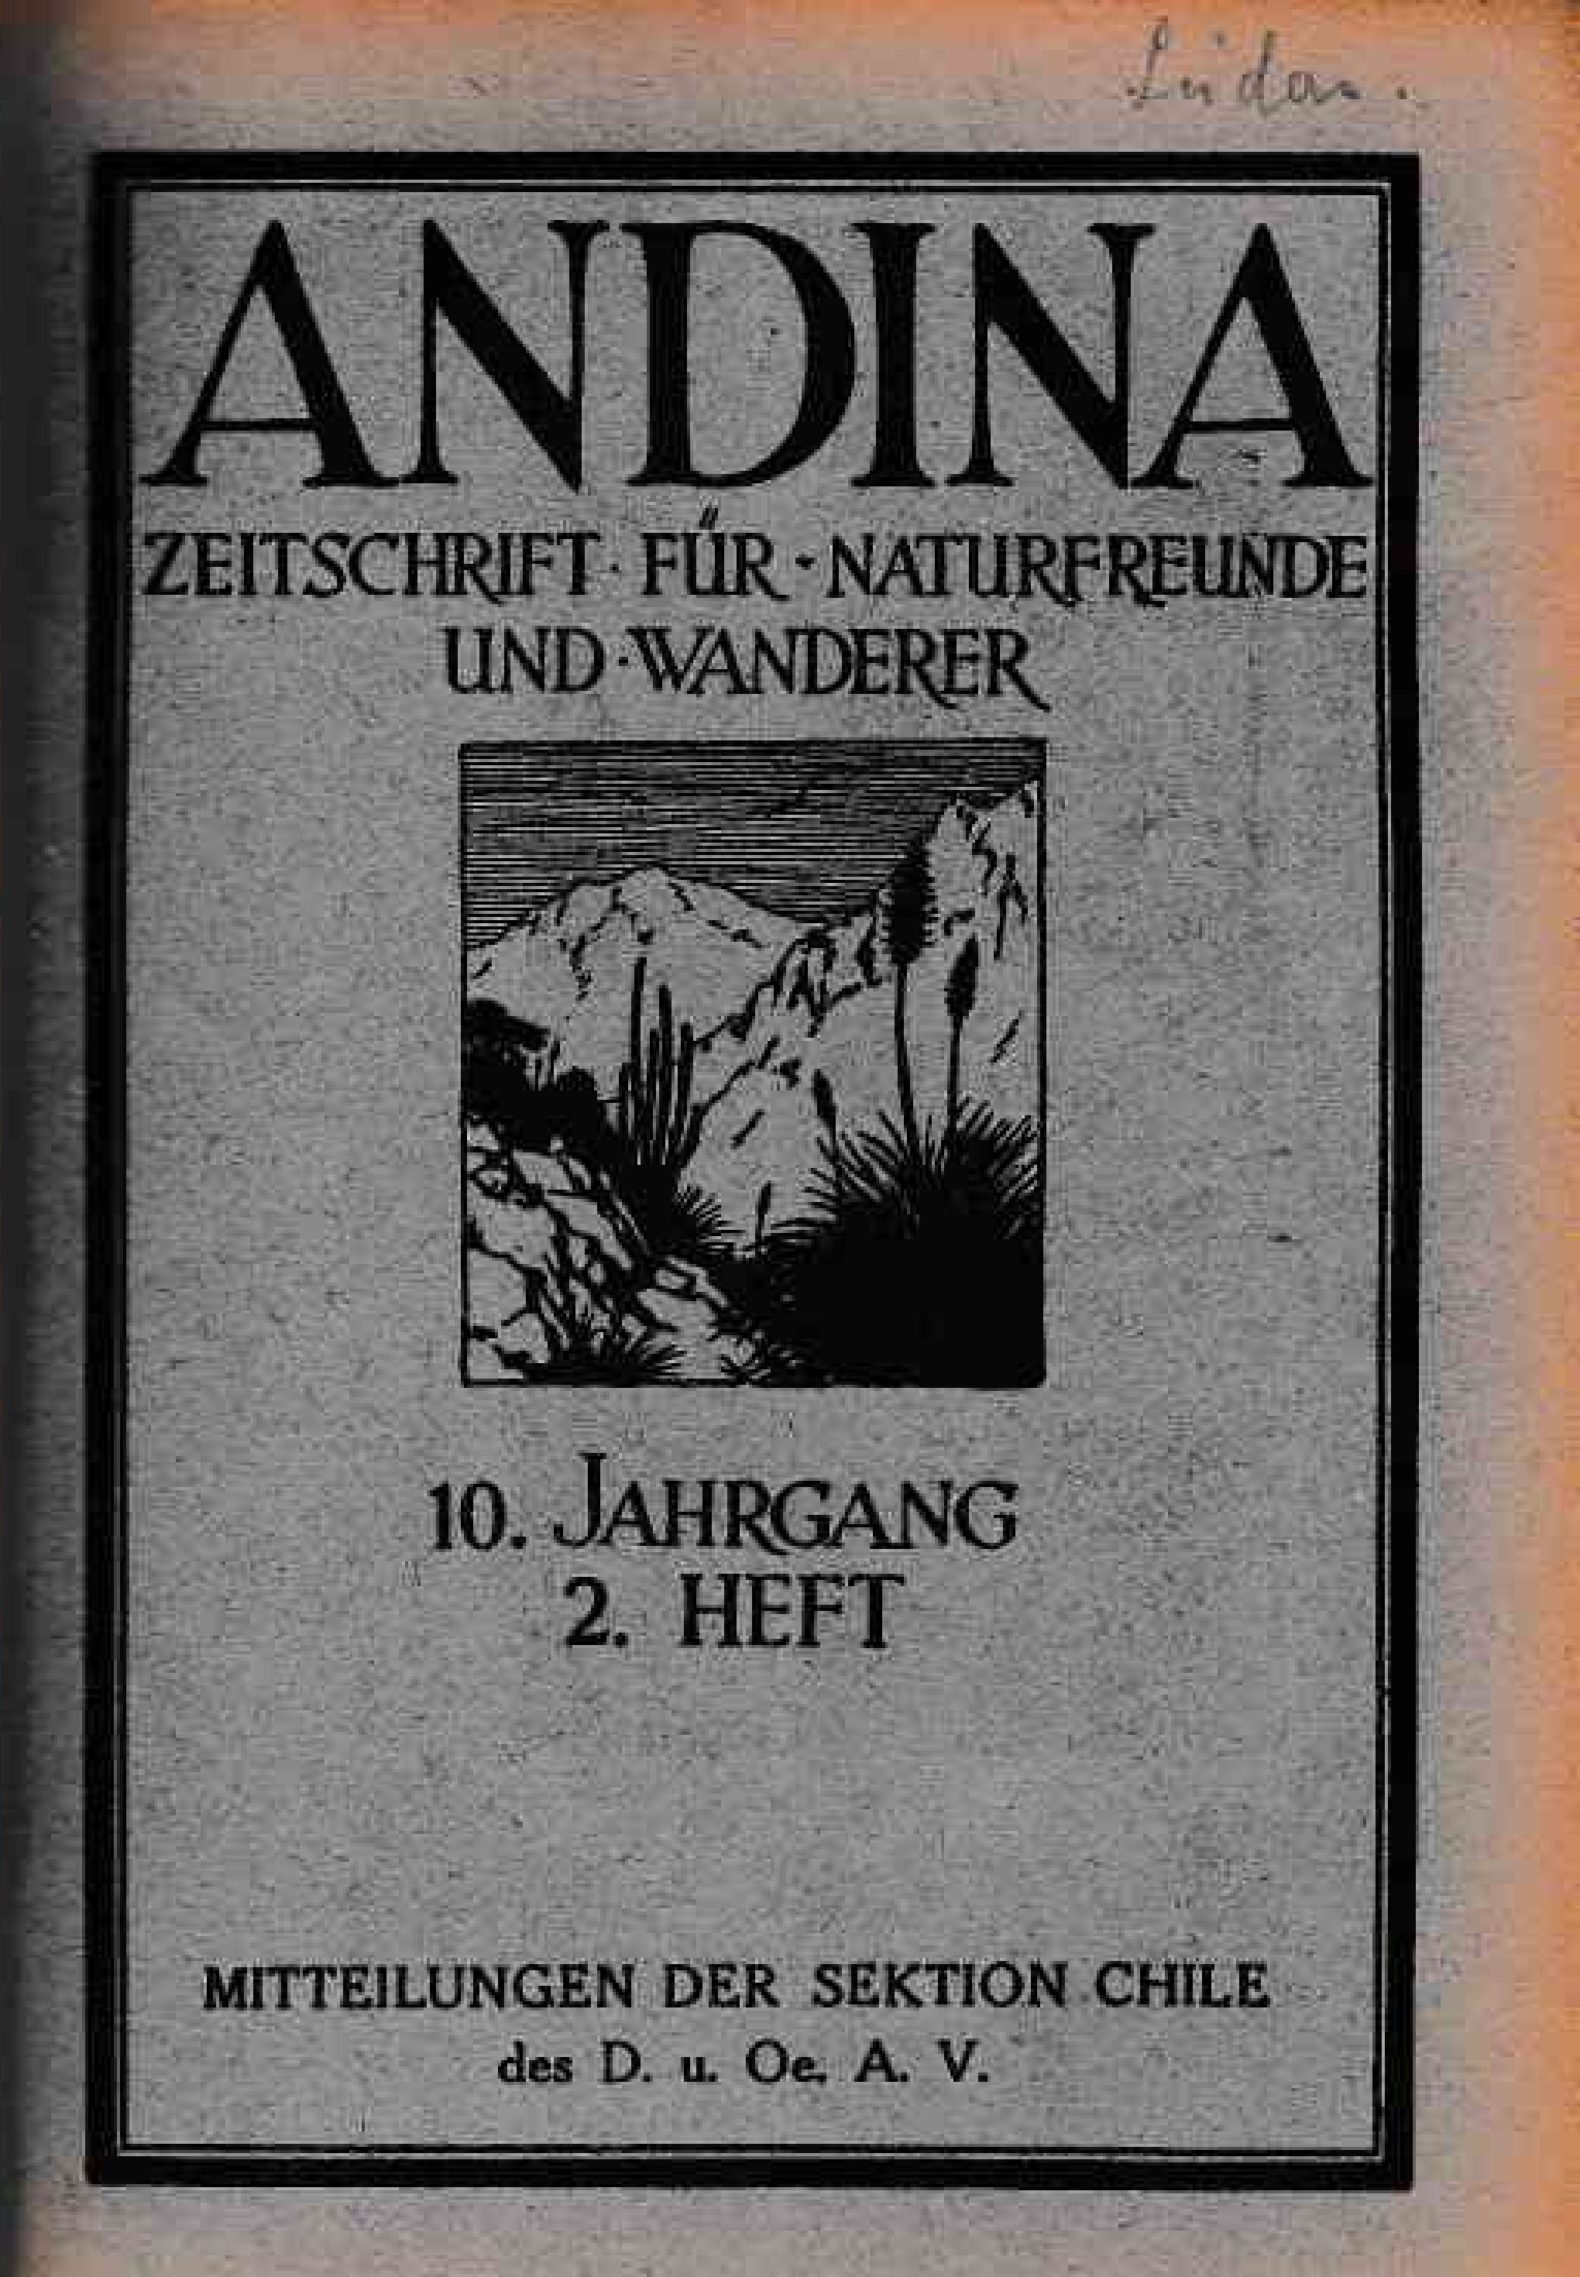 Revista Andina 1932 Heft 2